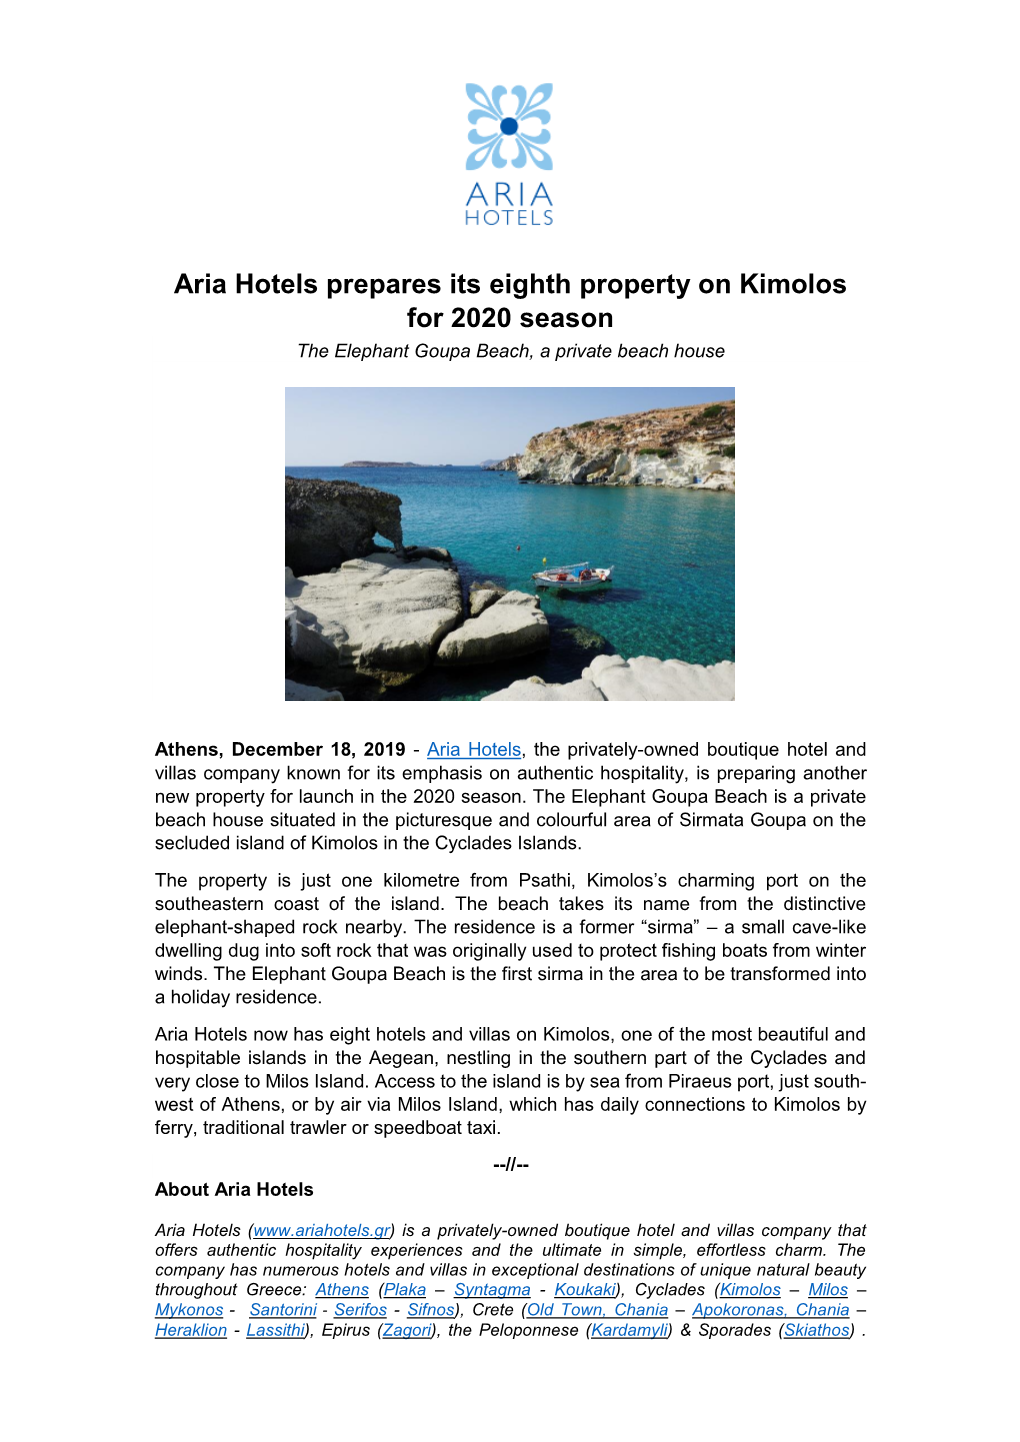 Aria Hotels Prepares Its Eighth Property on Kimolos for 2020 Season the Elephant Goupa Beach, a Private Beach House